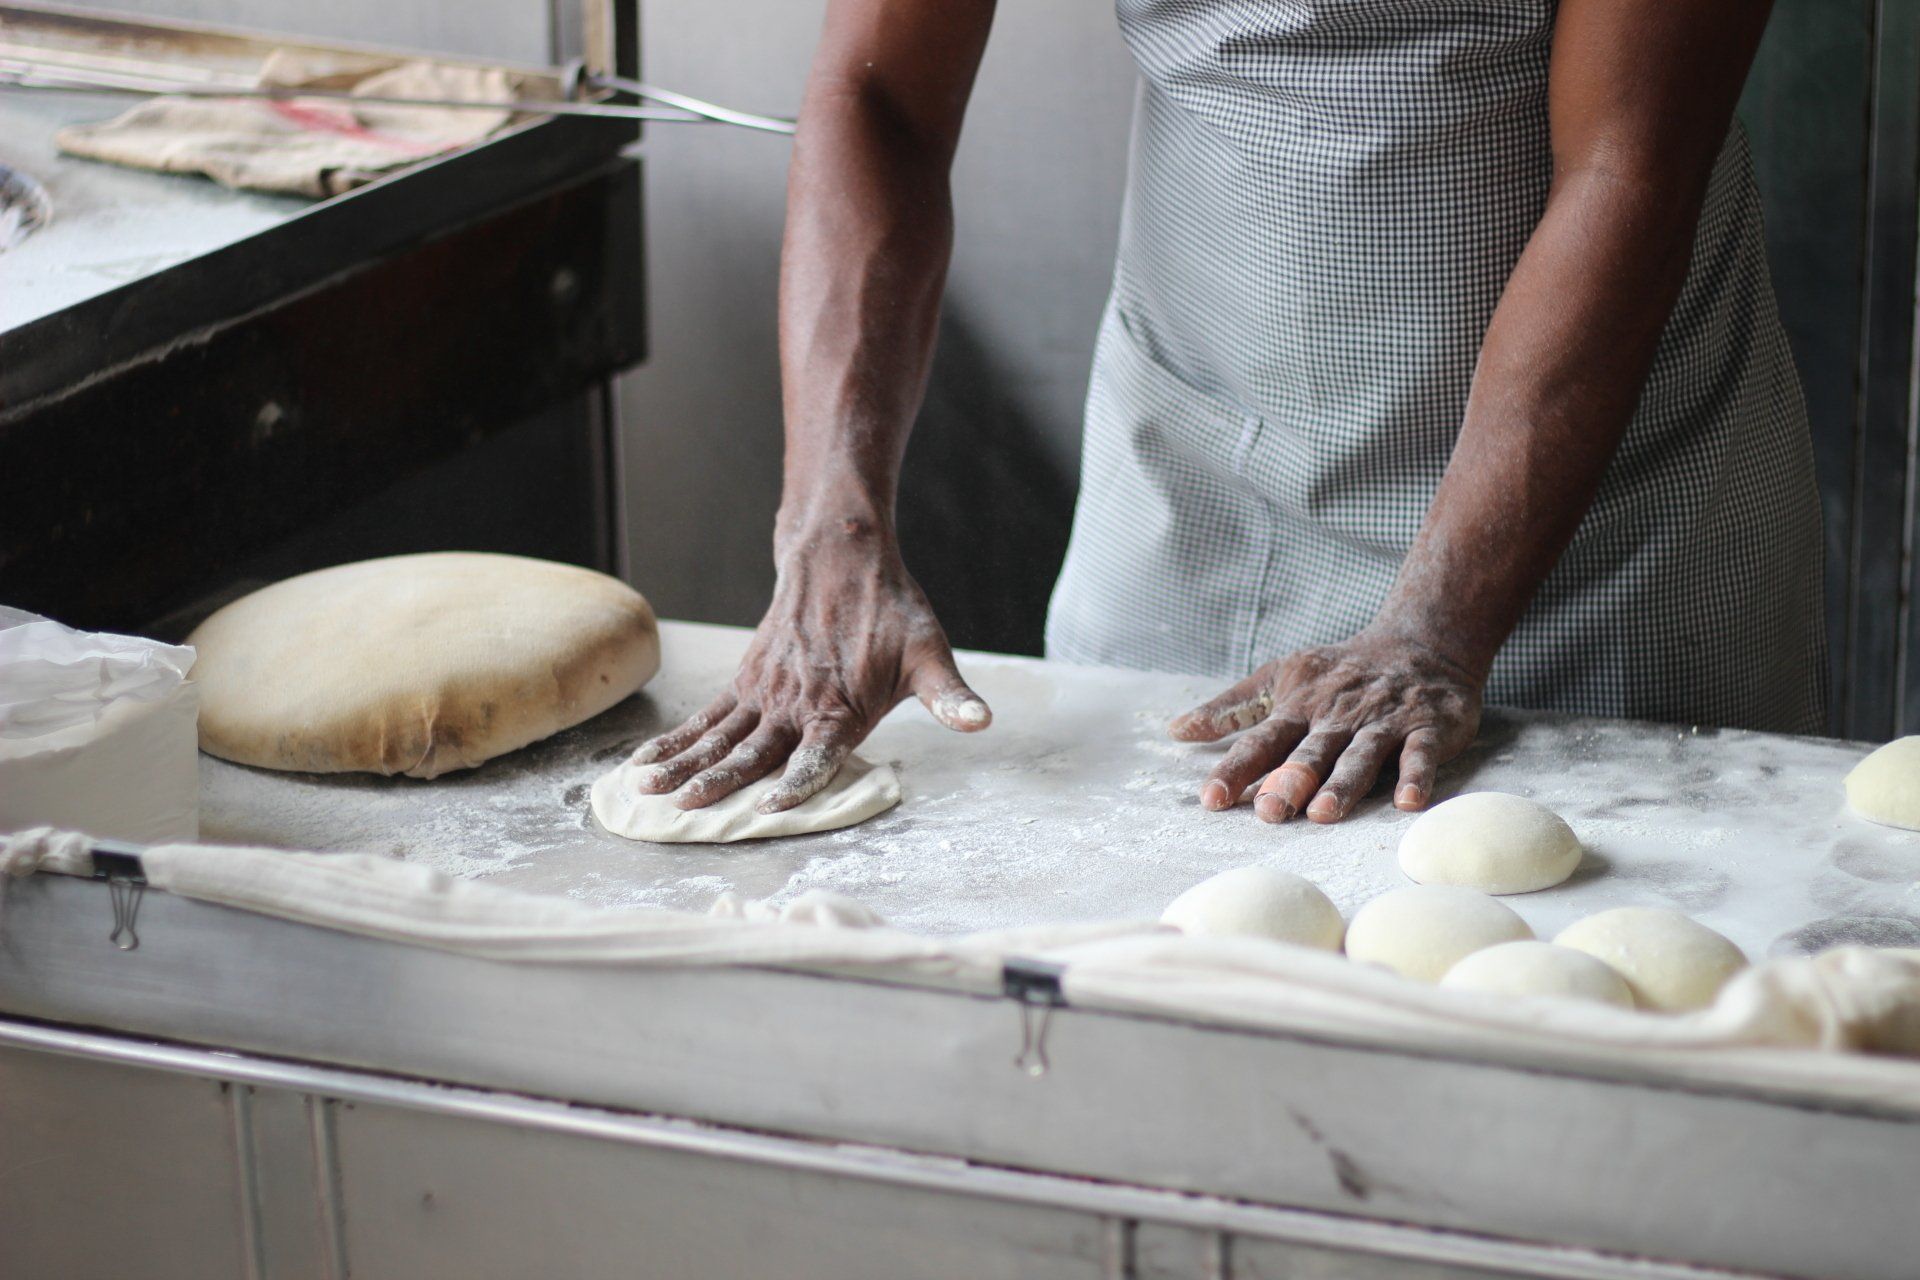 Man prepares dough for the oven